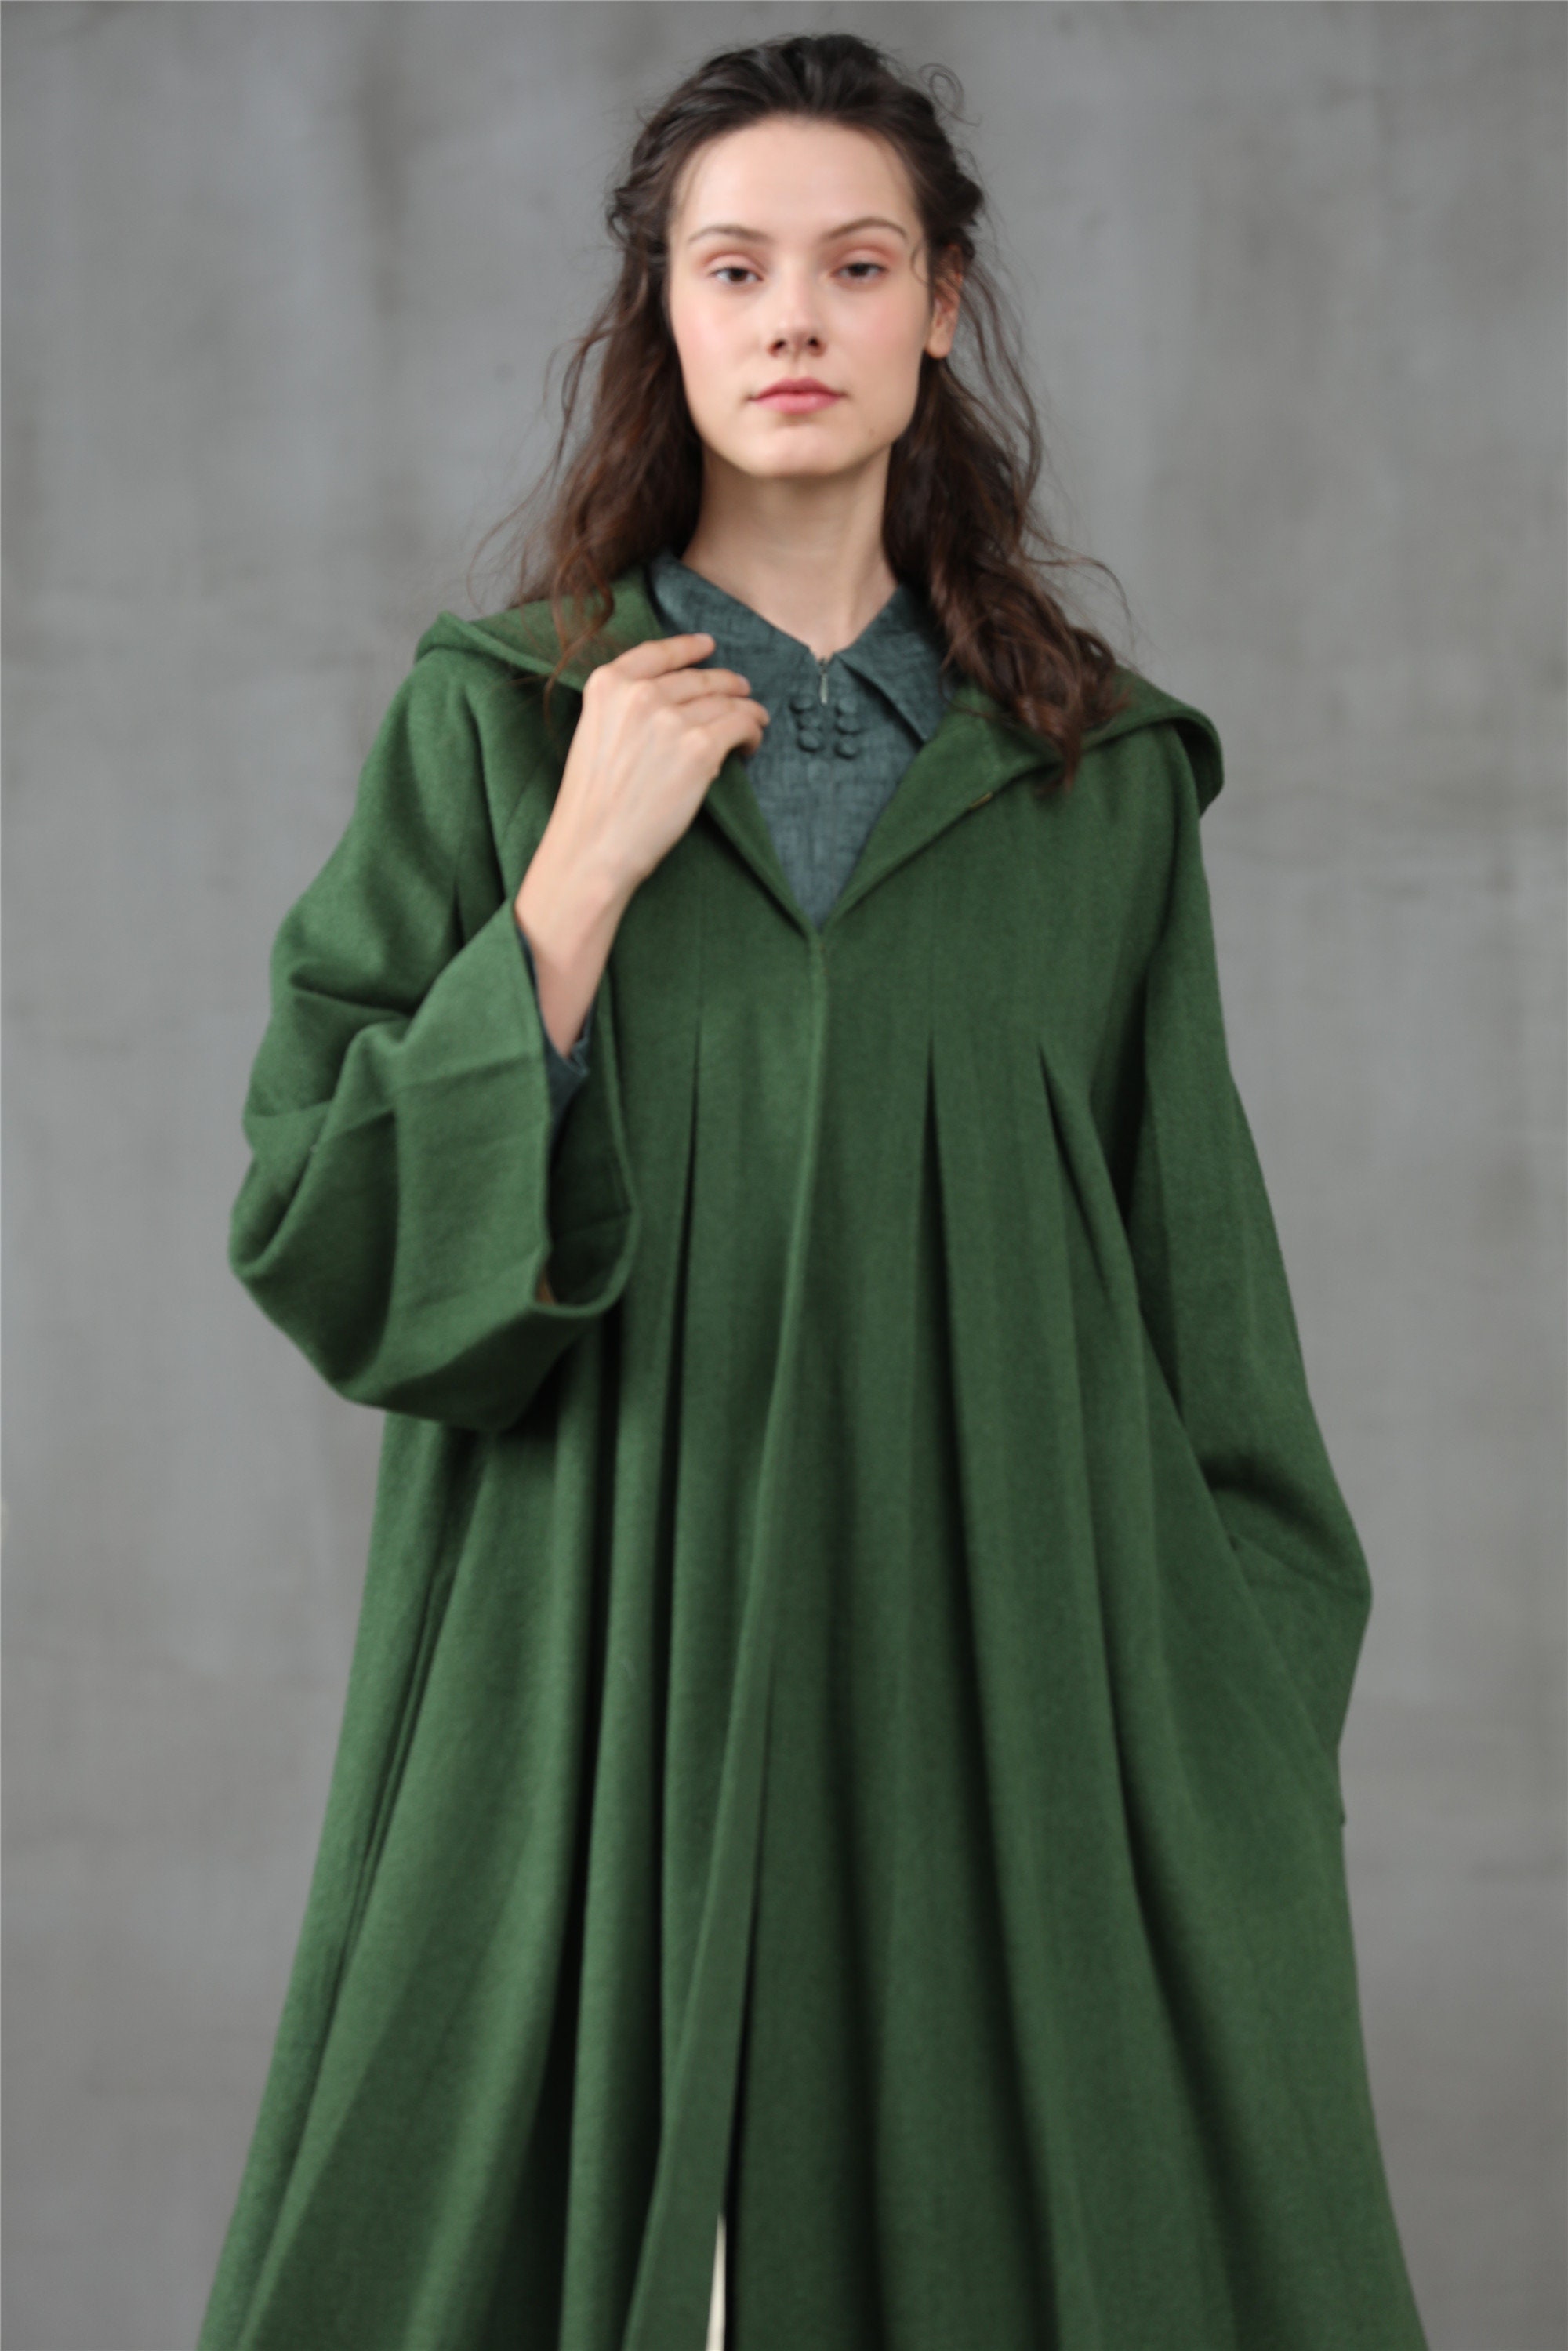 Green wool coat cashmere coat hooded coat winter coat | Etsy